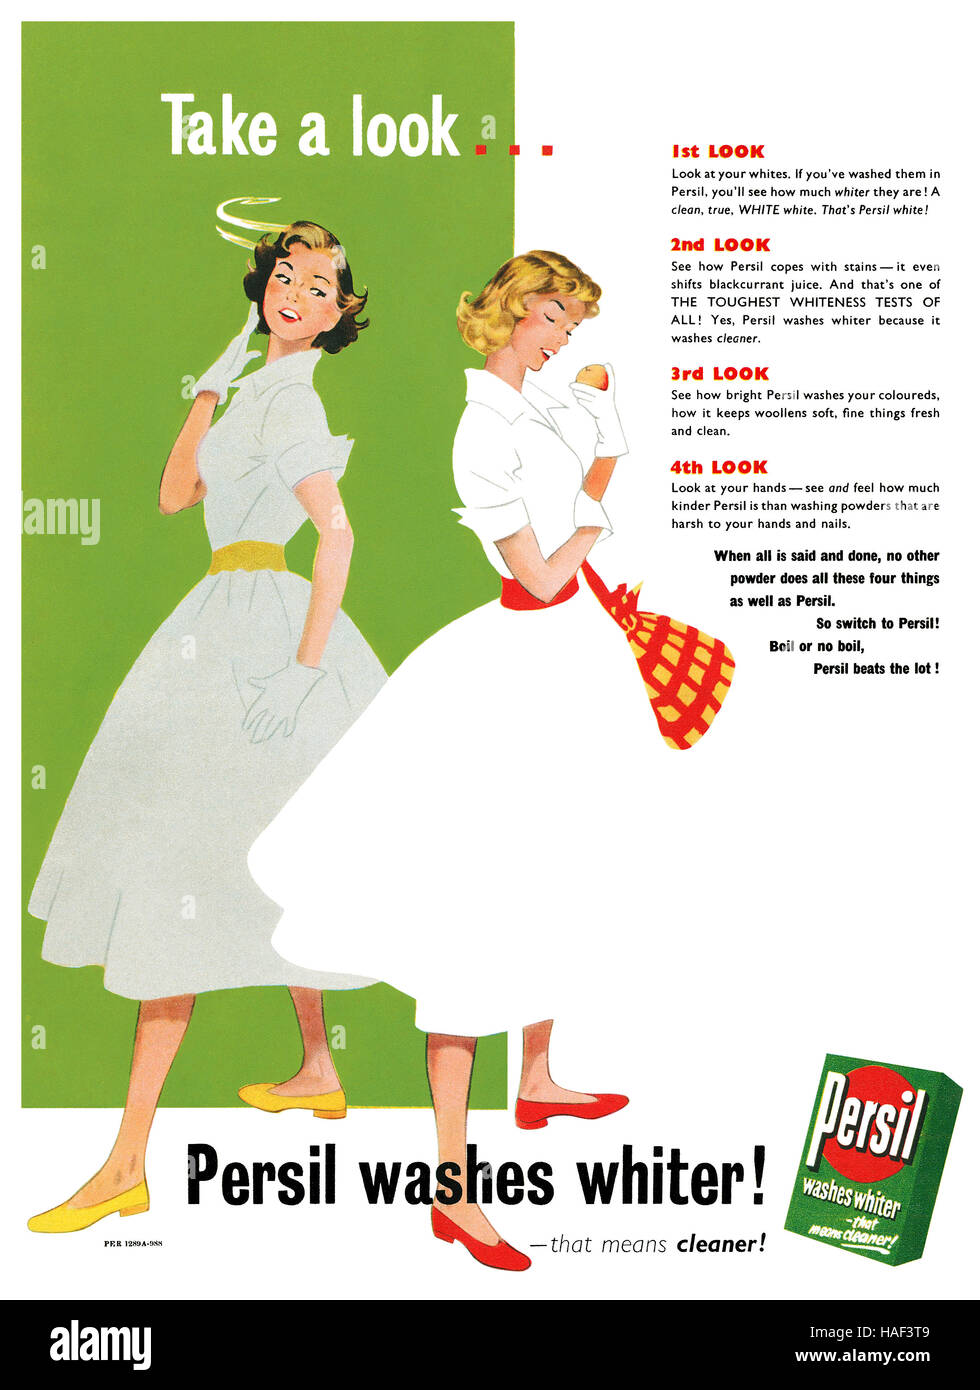 1954 British advertisement for Persil Washing Powder Stock Photo